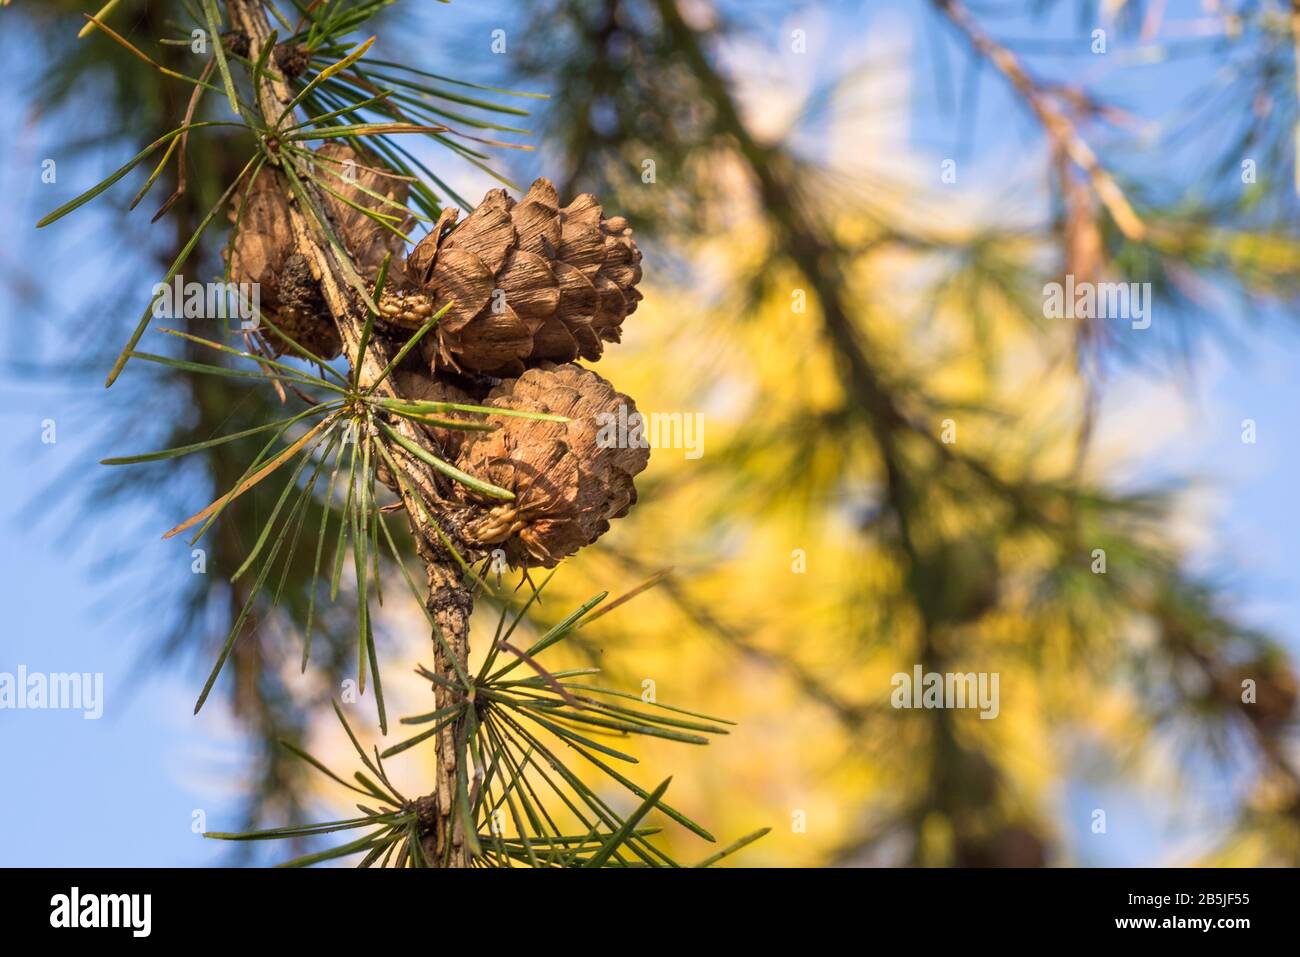 Detailed image of cones of Larix decidua (European Larch) in a forest Stock Photo